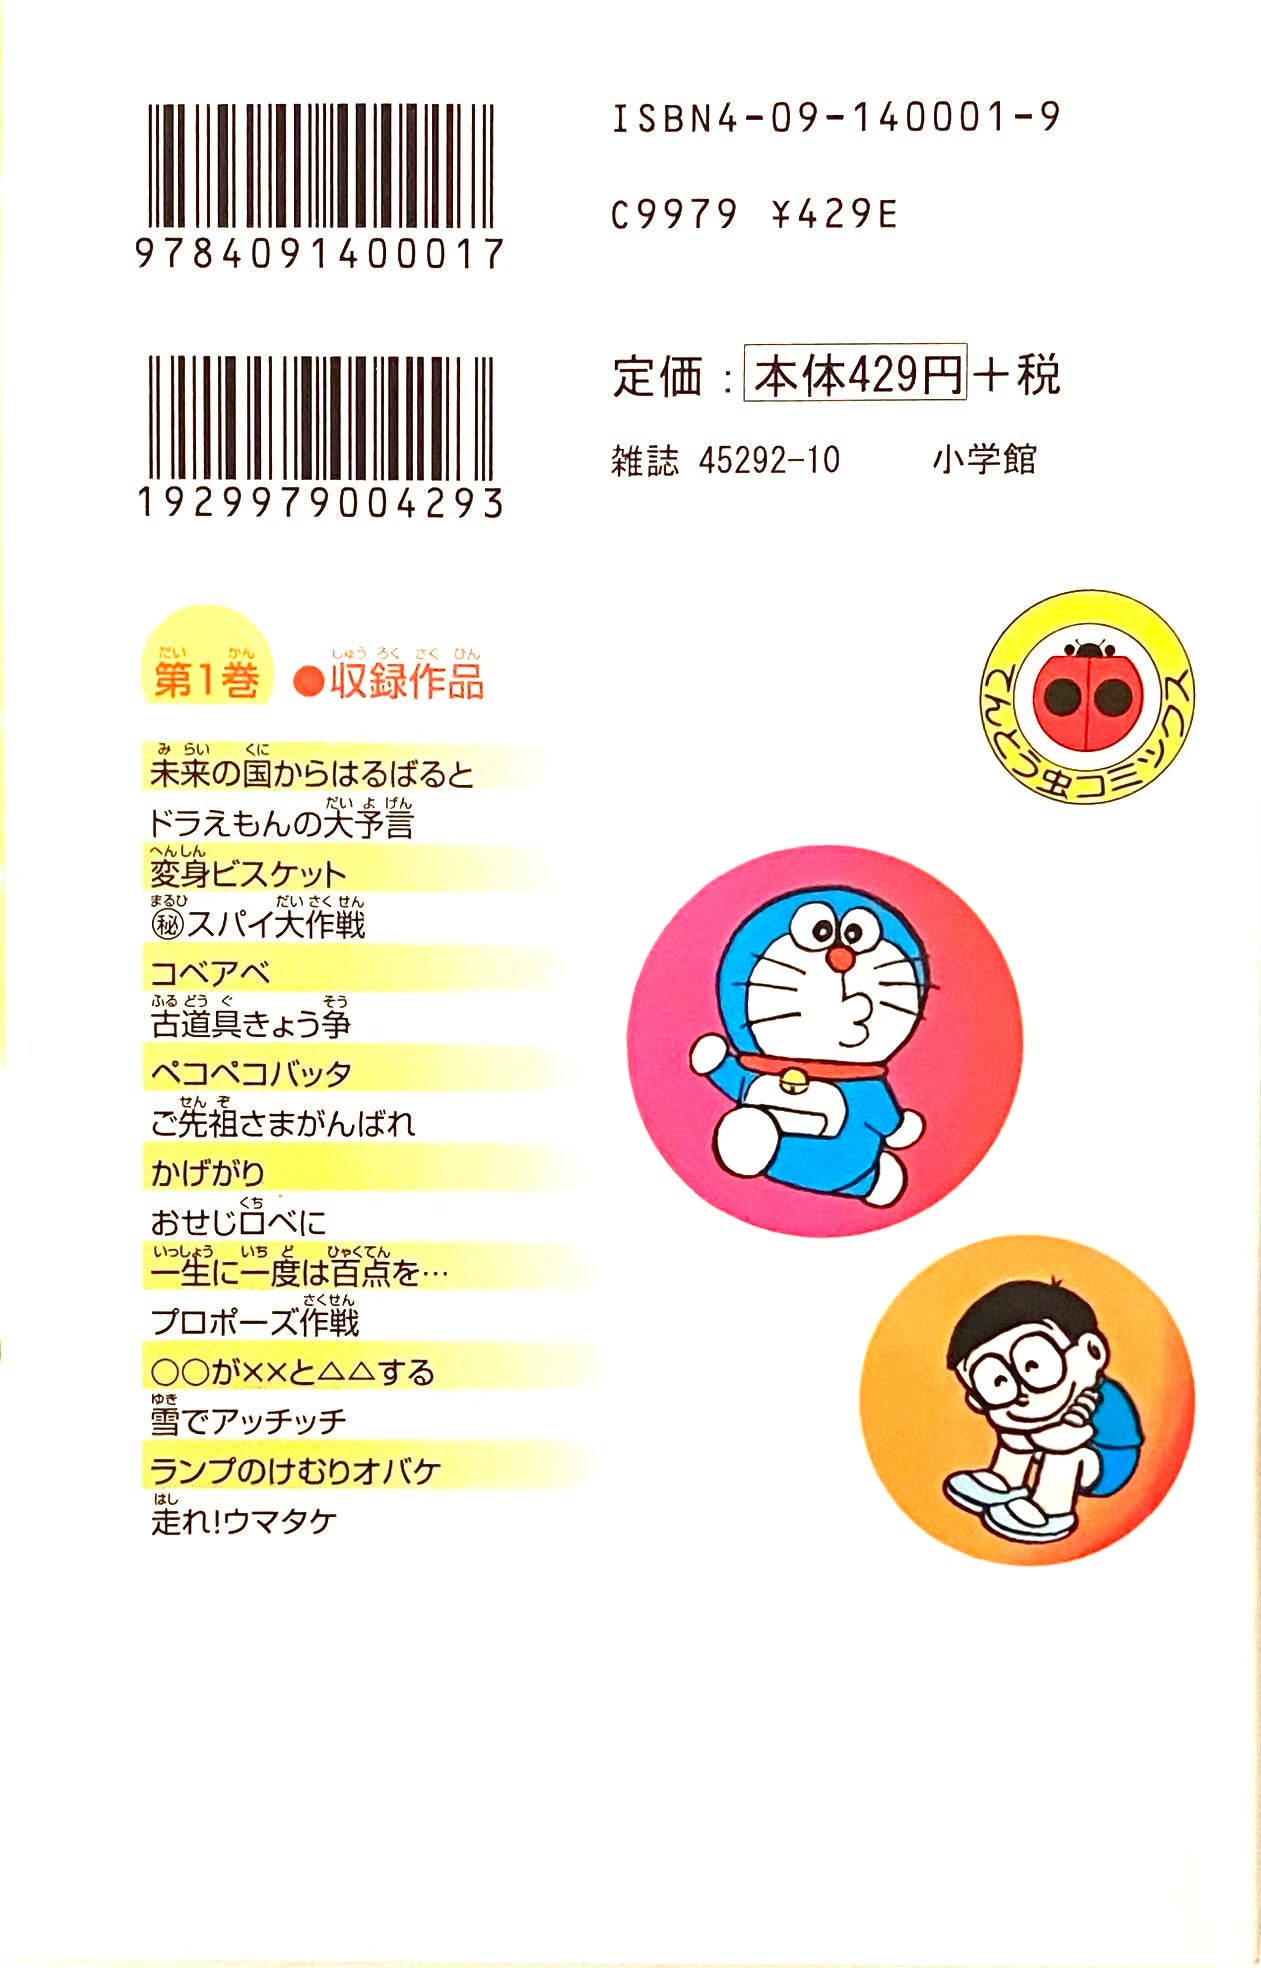 Doraemon Vol.1- Official Japanese Edition